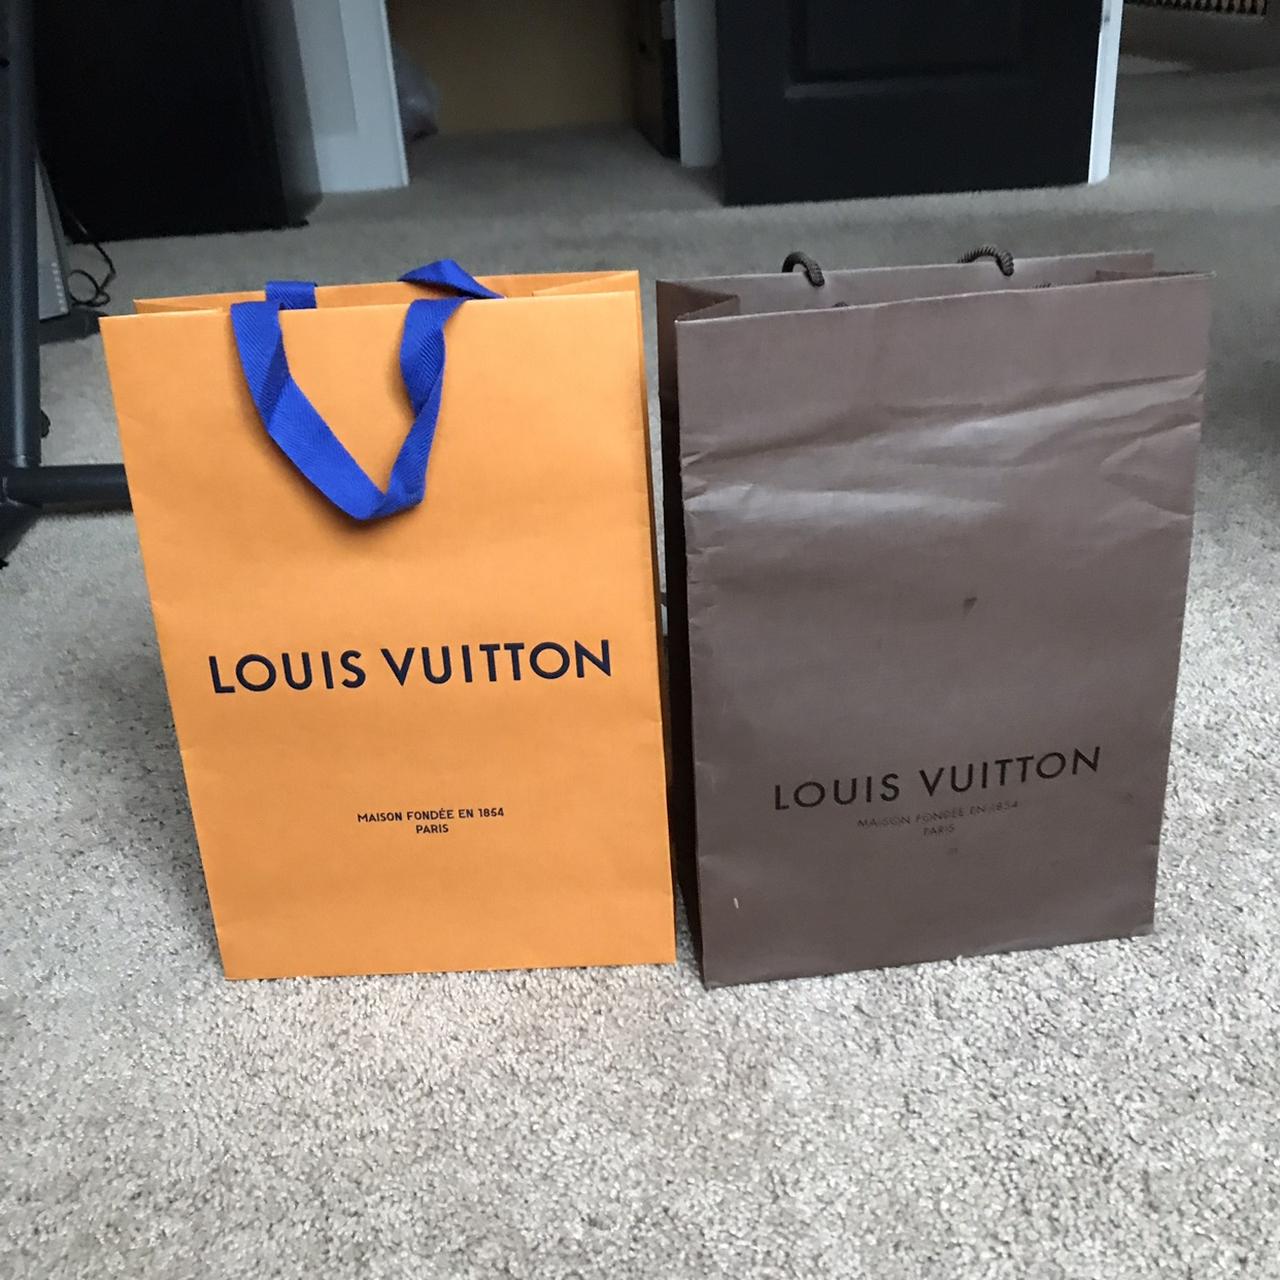 XL Louis Vuitton shopping bag